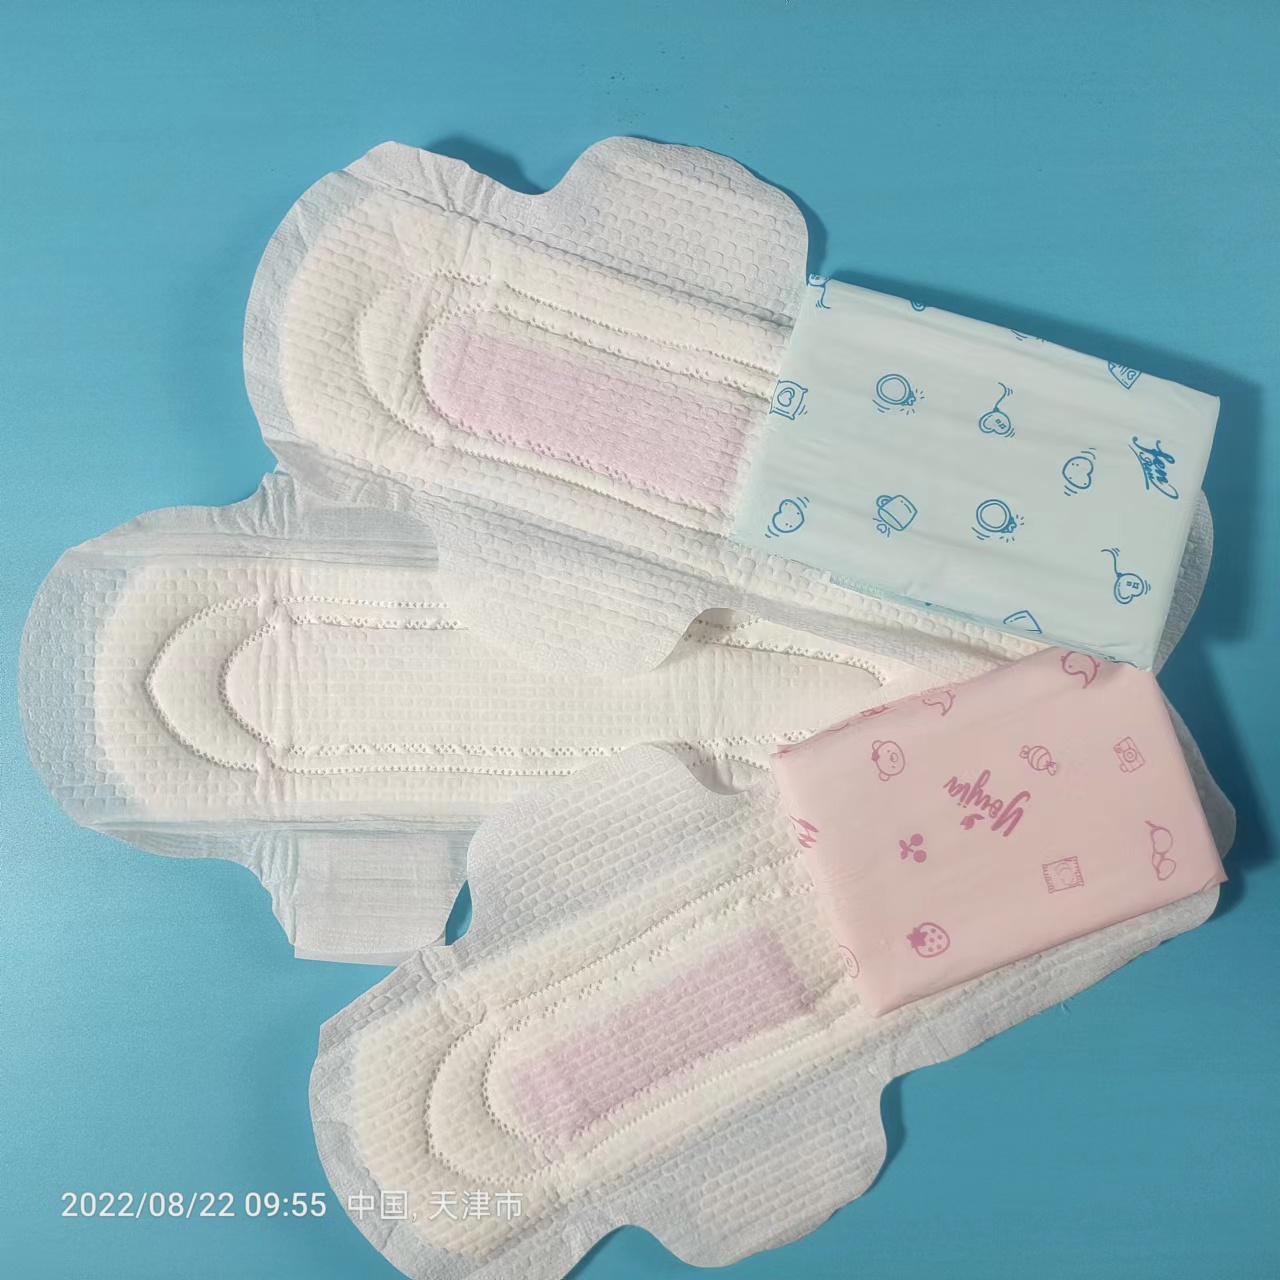 The history of sanitary napkins